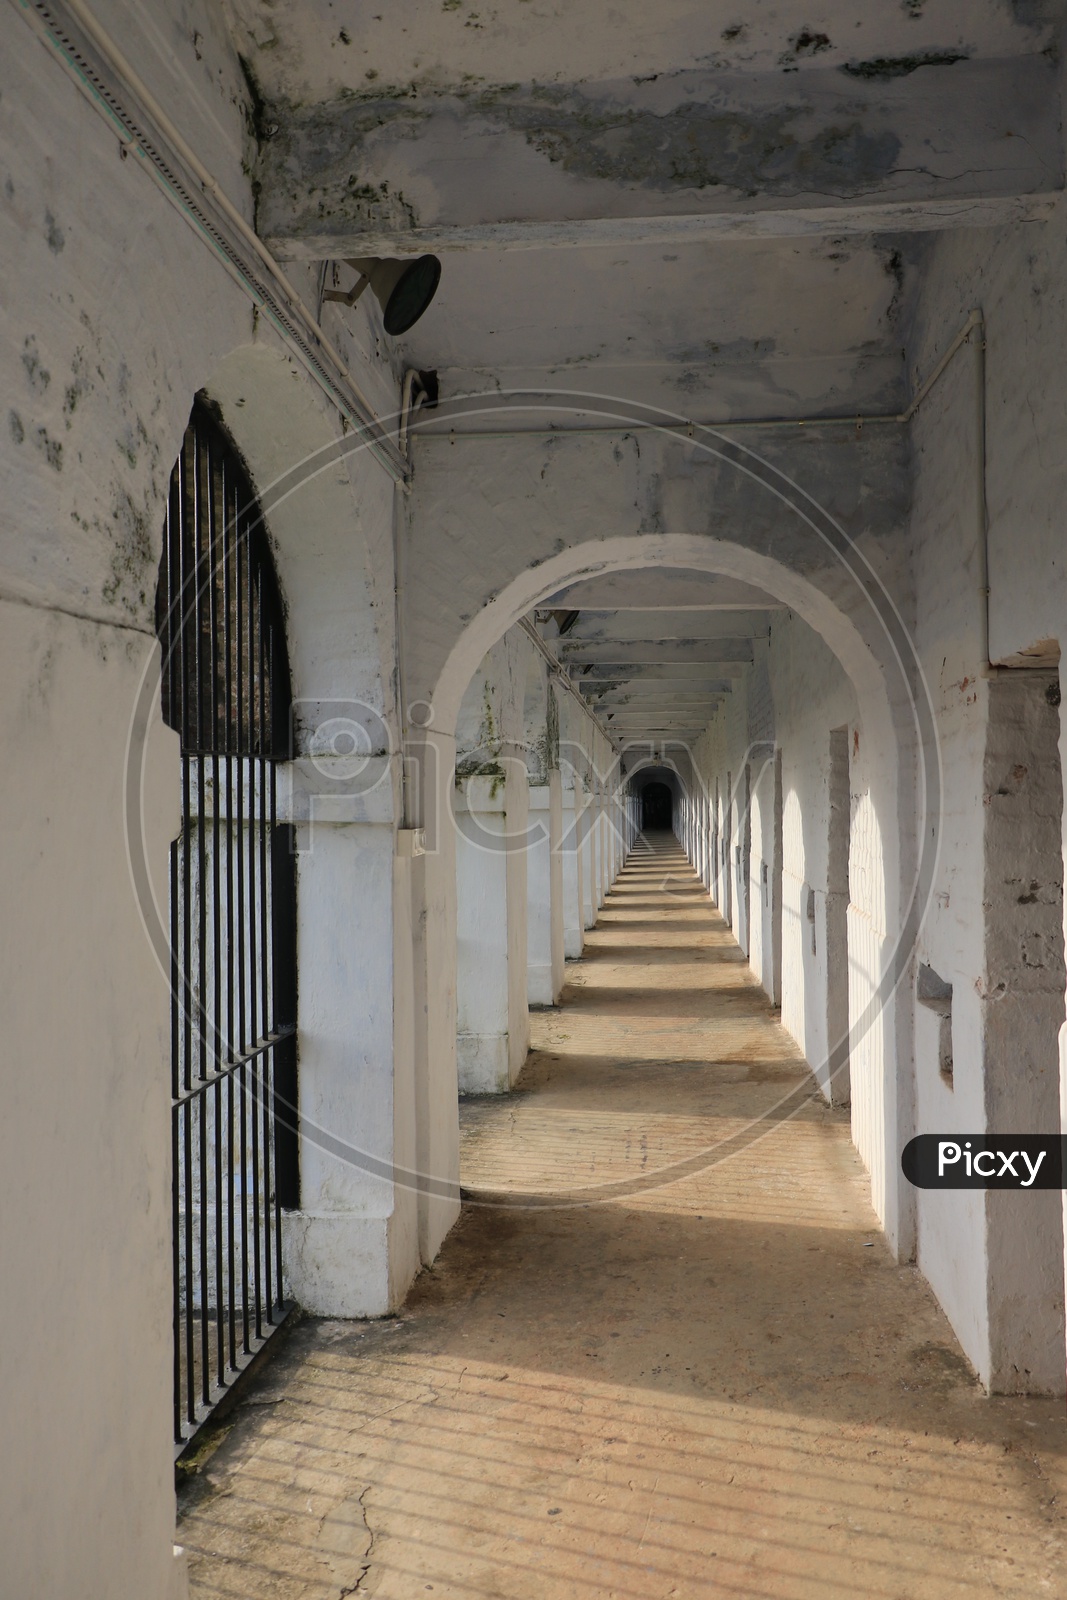 Interior Views Of Andaman Prison / Jail